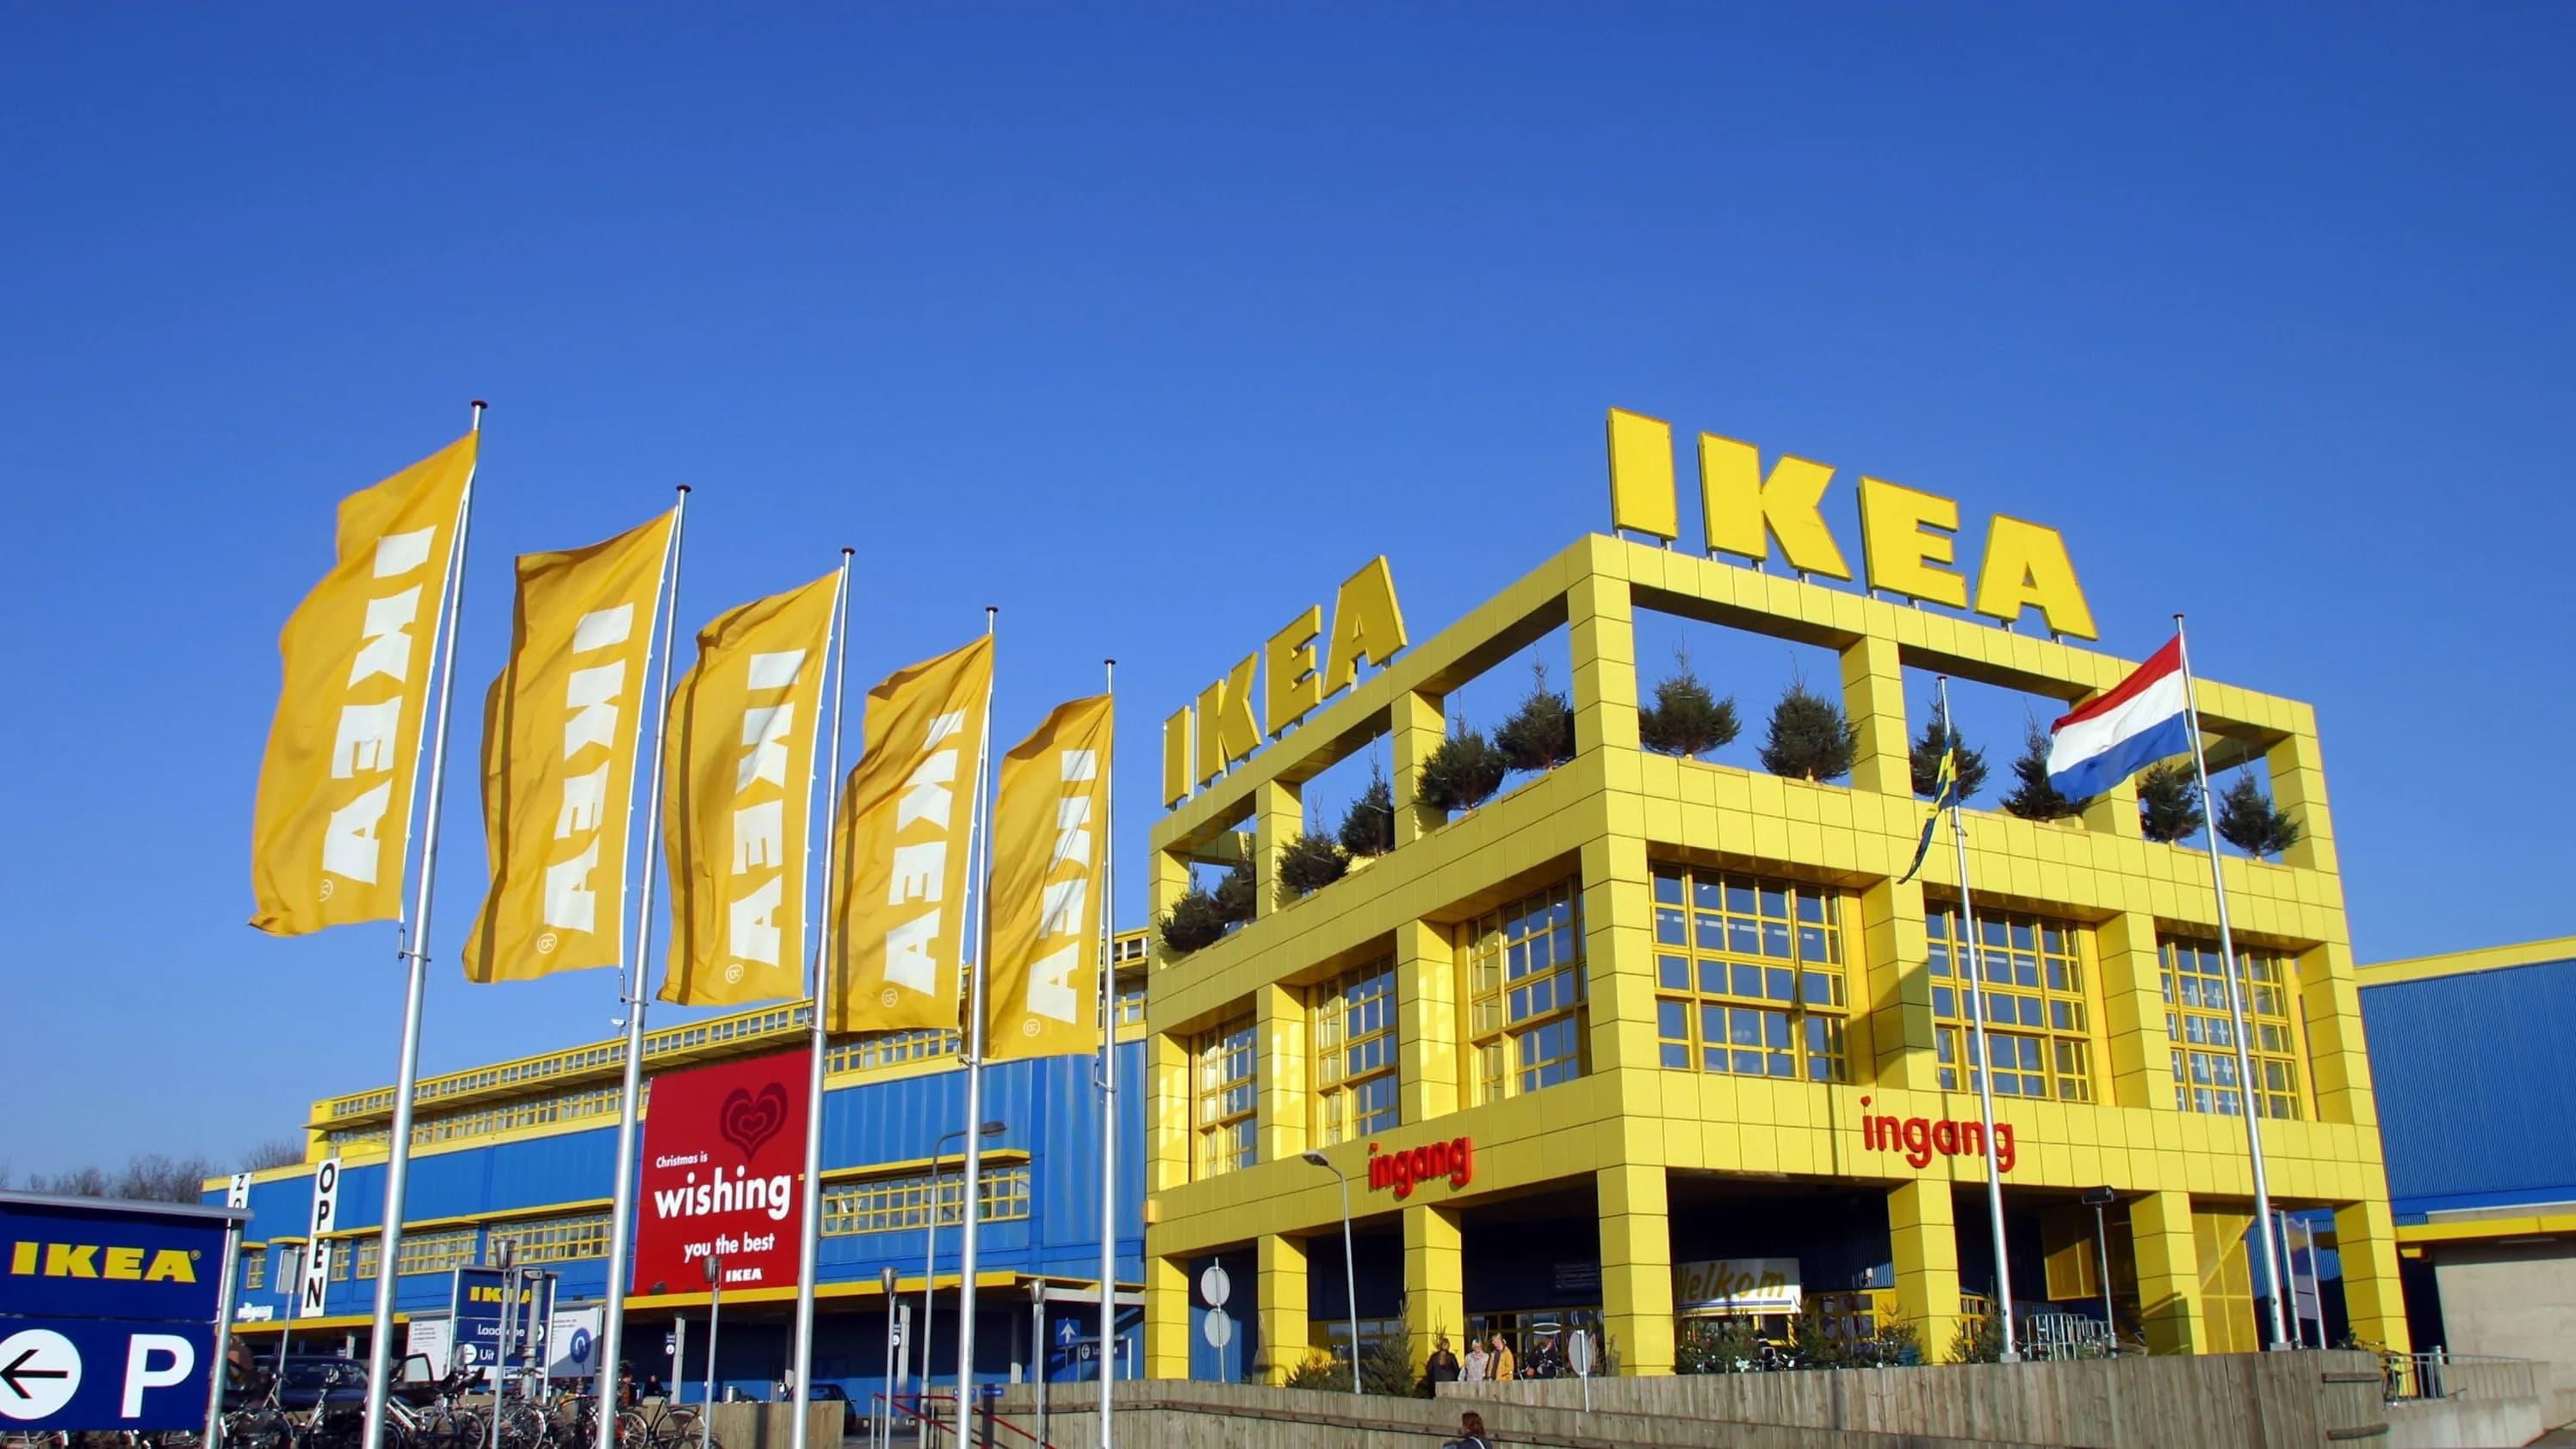 IKEA Lights - The Next Generation (Christmas Vacation) backdrop